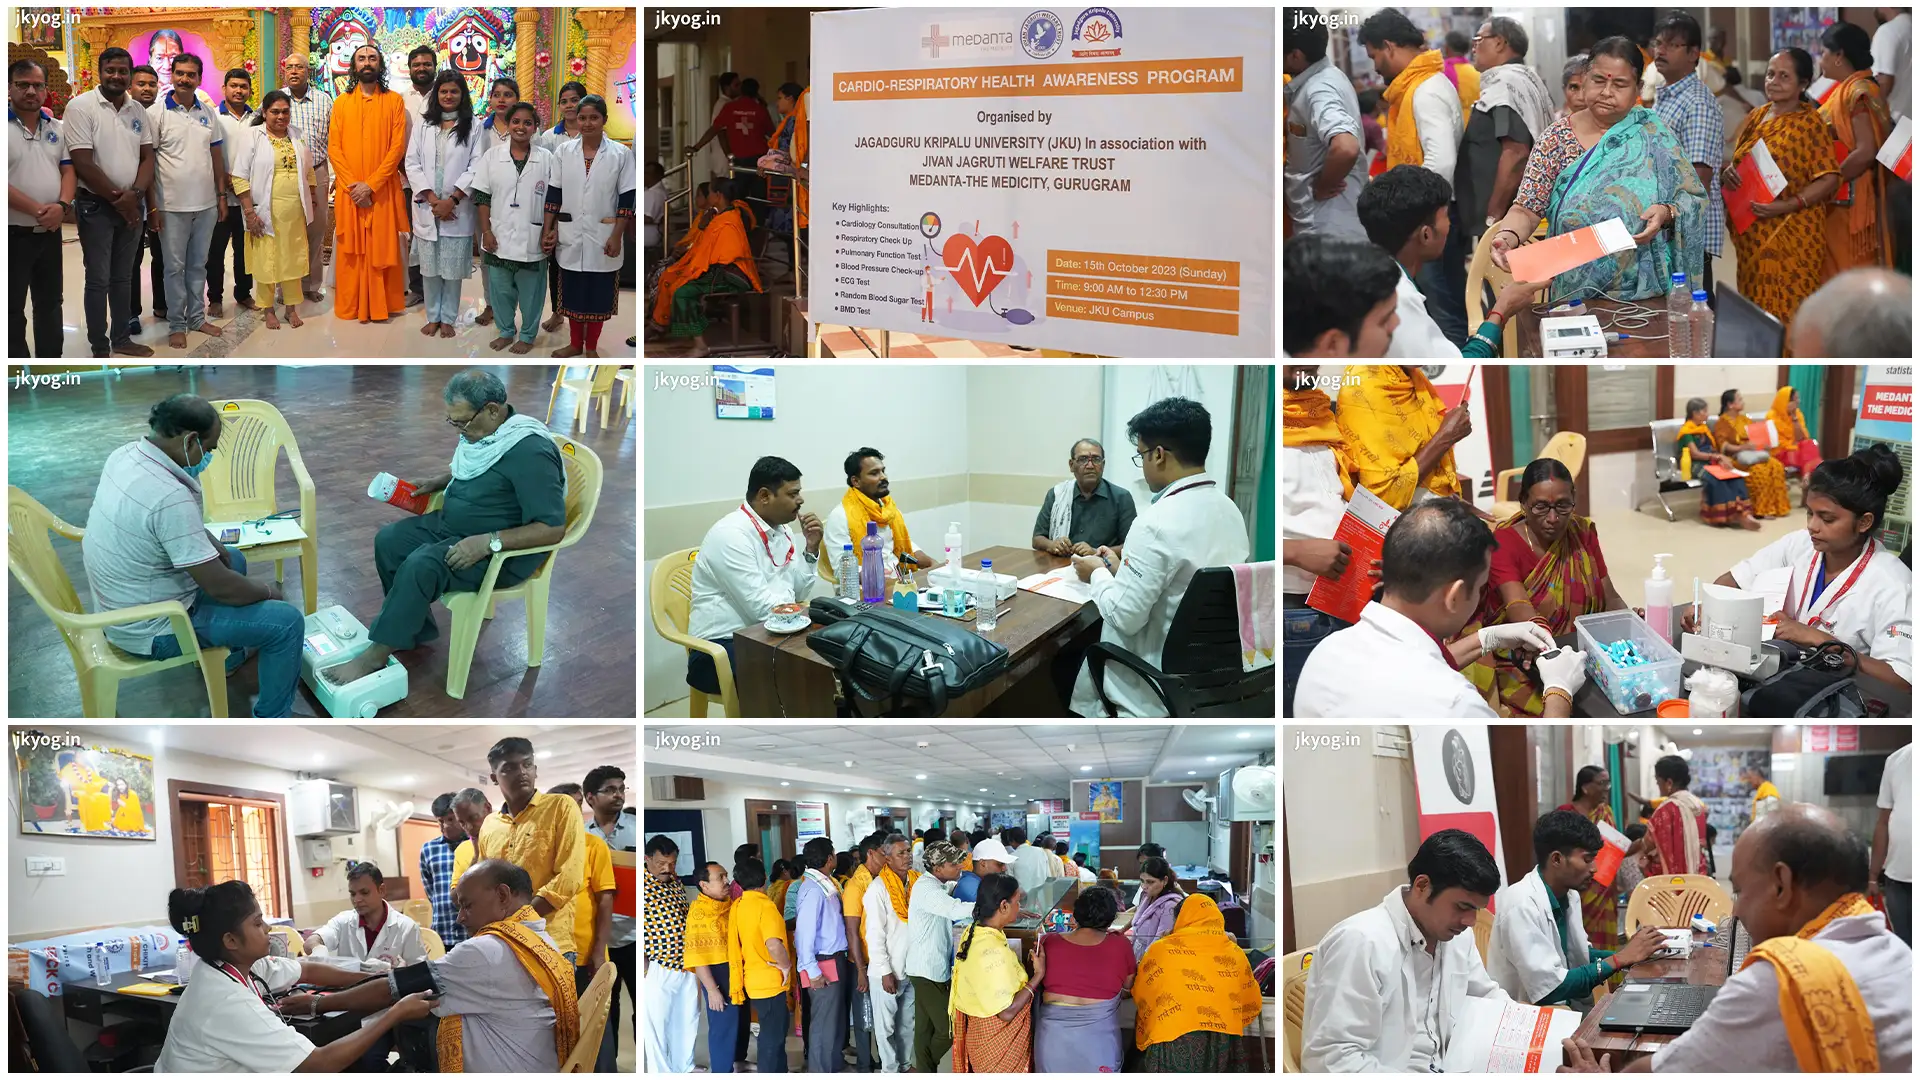 Cardio-Respiratory Health Program by Jagadguru Kripalu University in Collaboration with Medanta Hospital and Jivan Jagruti Welfare Trust